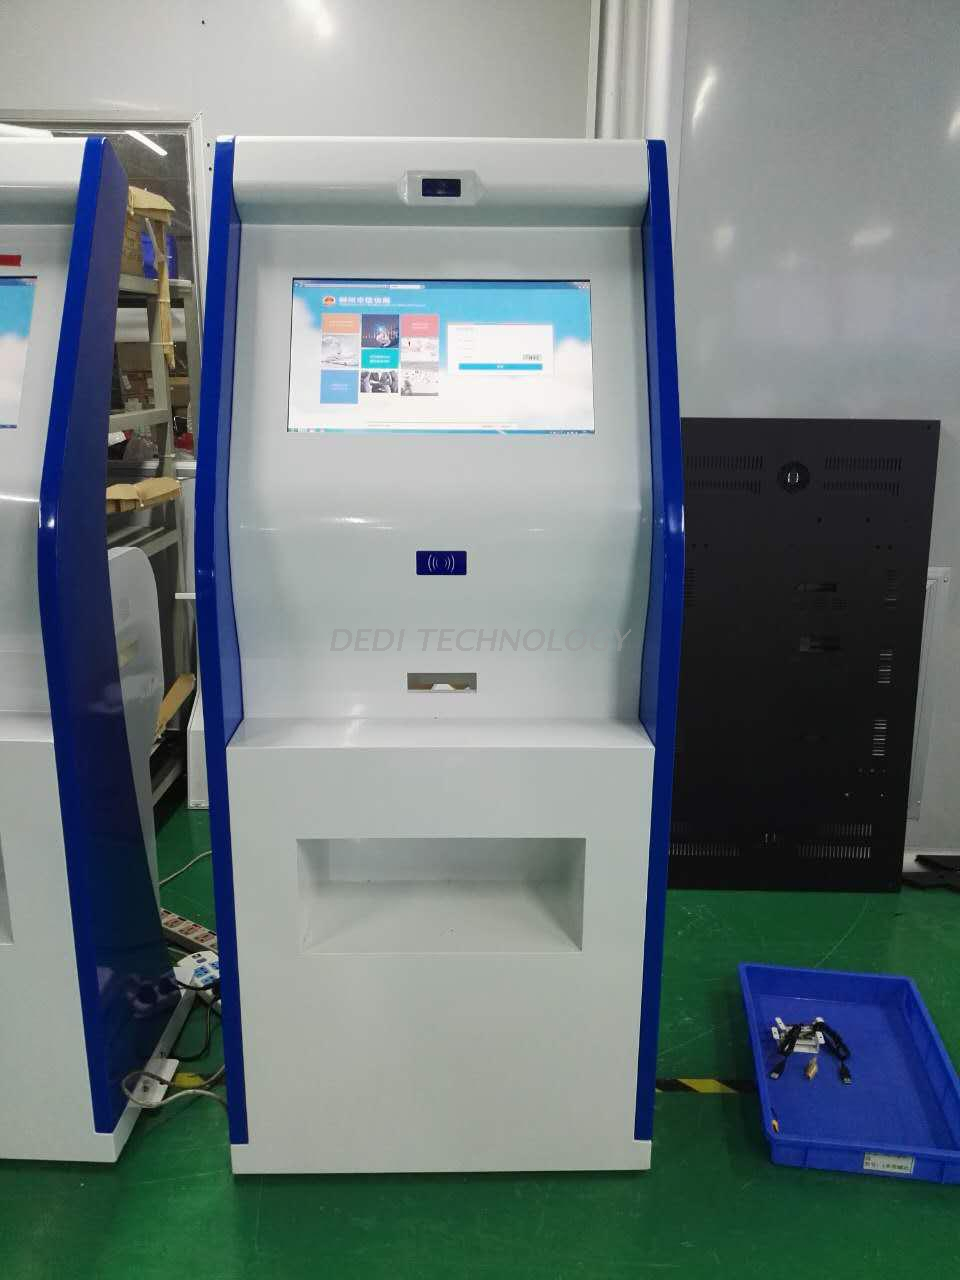 Dedi Bitcoin ATM cash Payment BitCoin Vending Machine